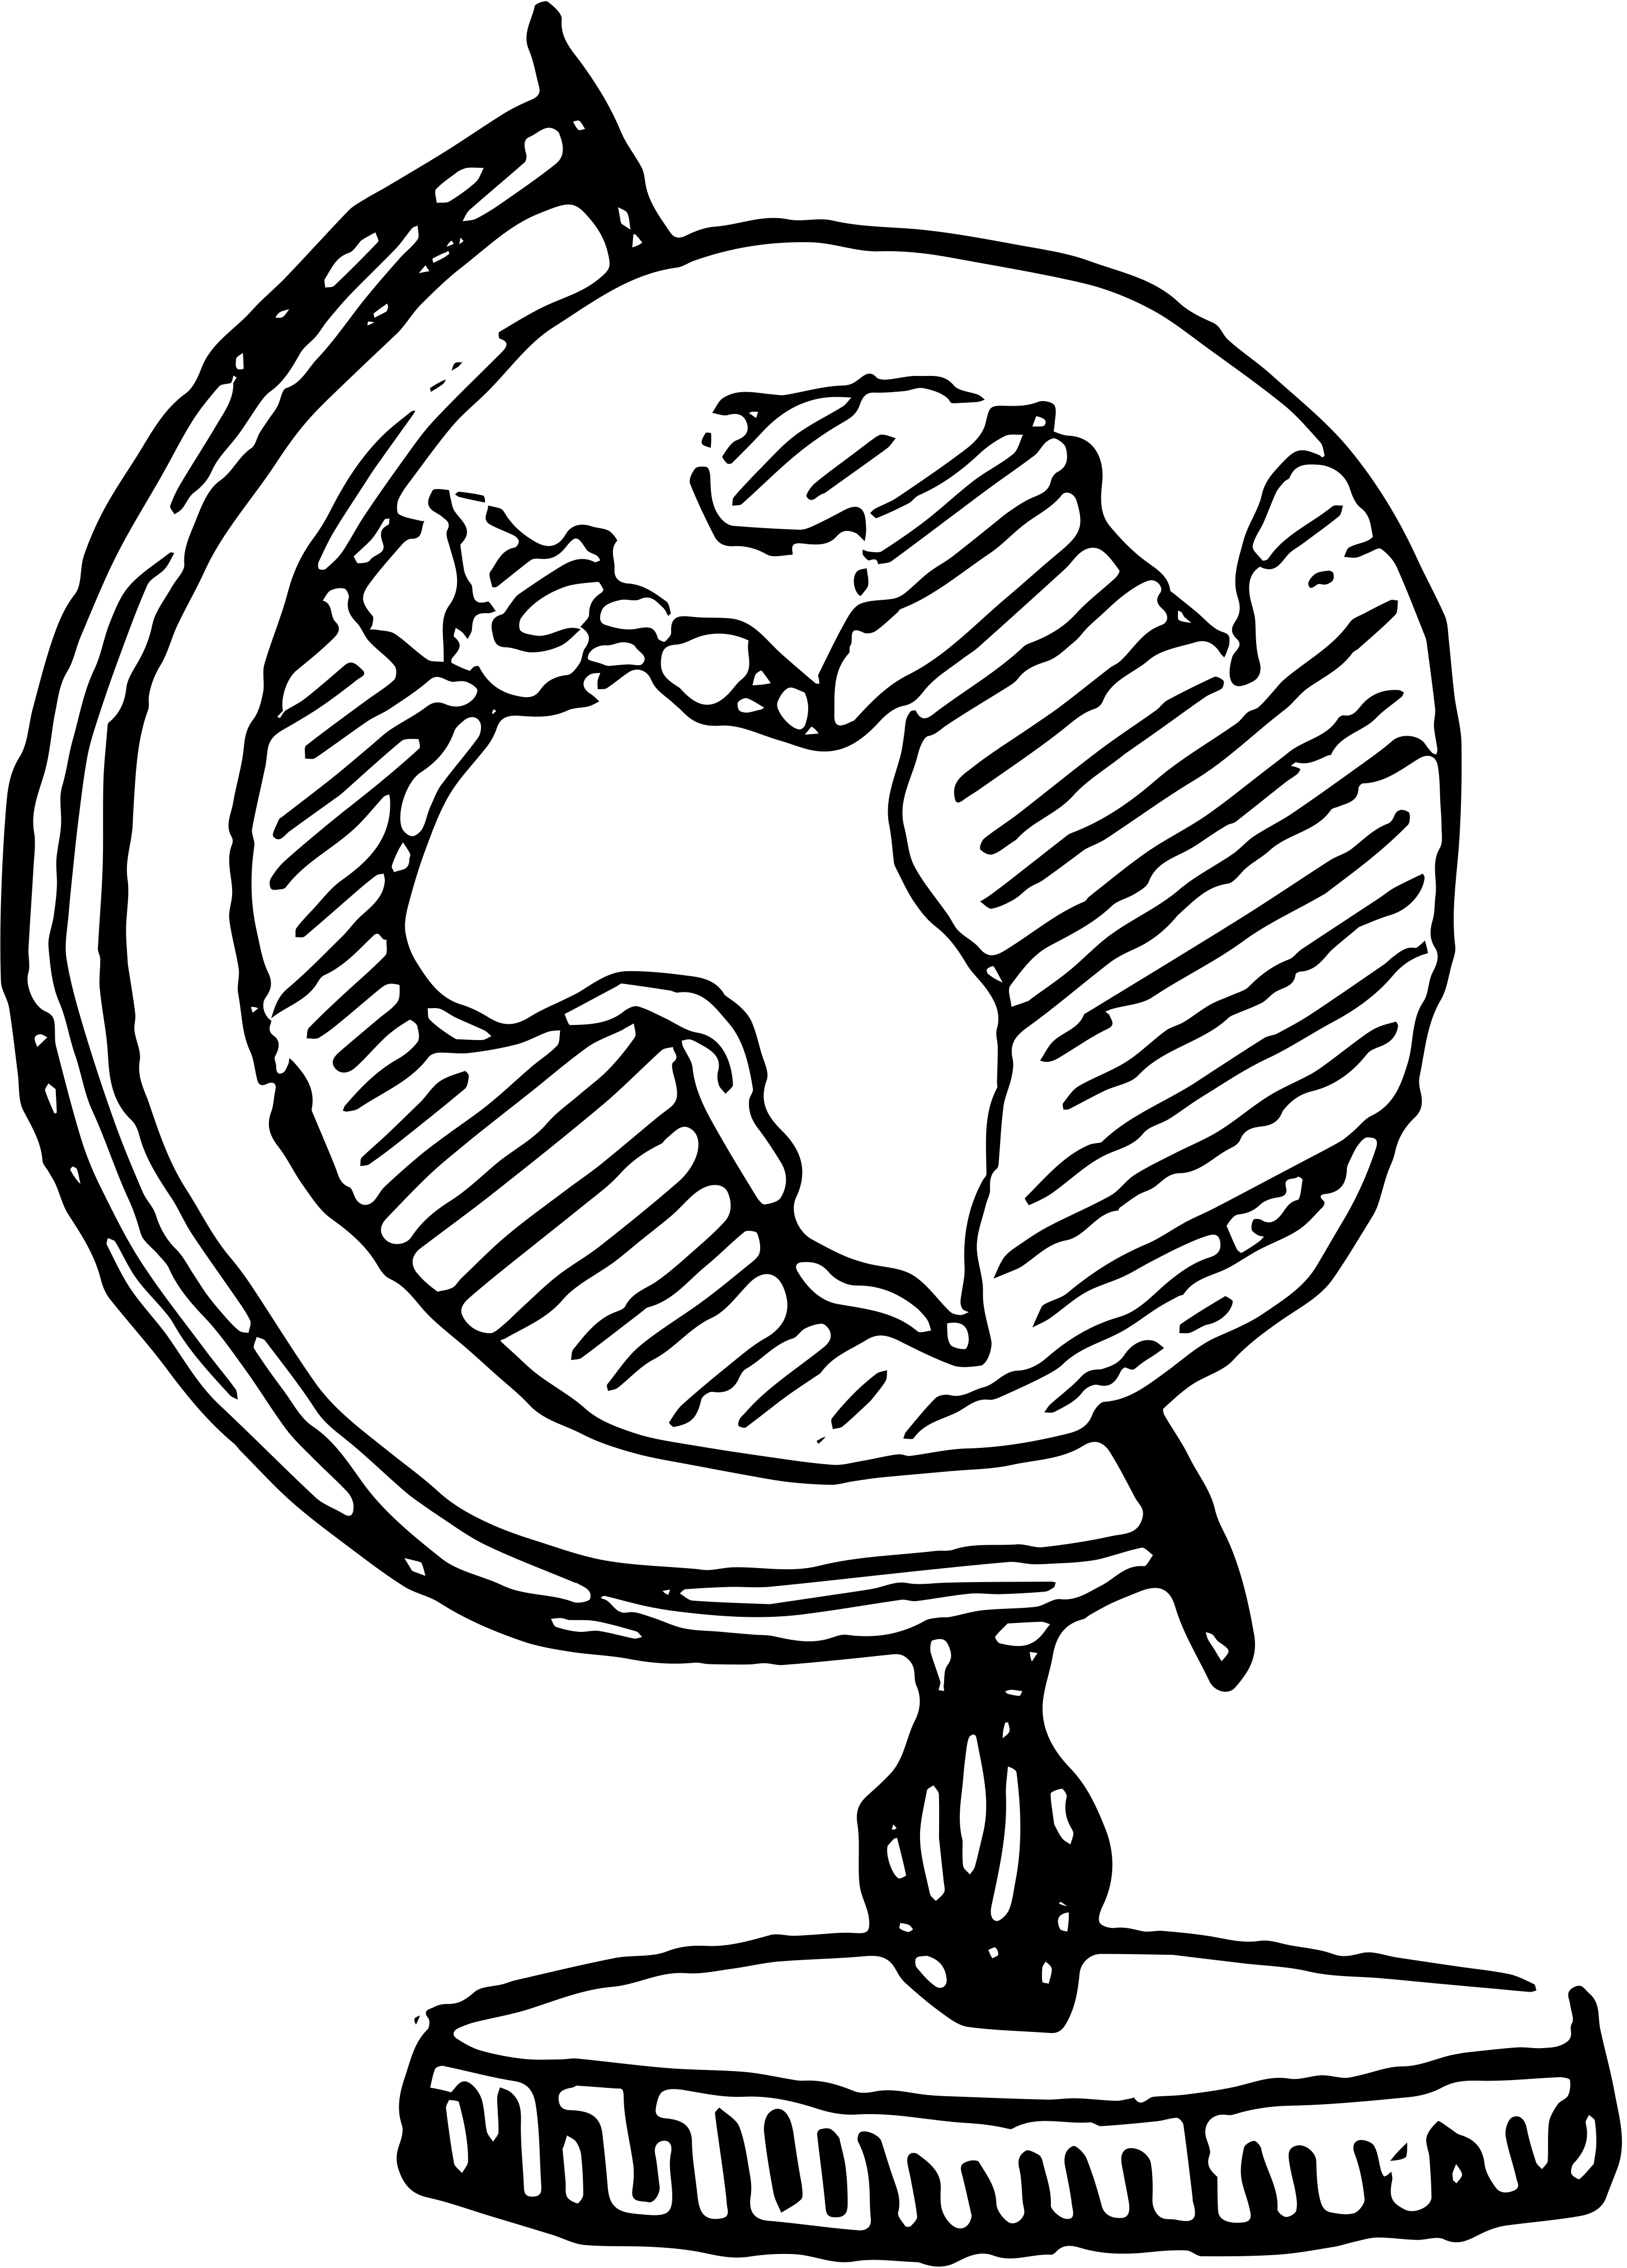 Globe drawing